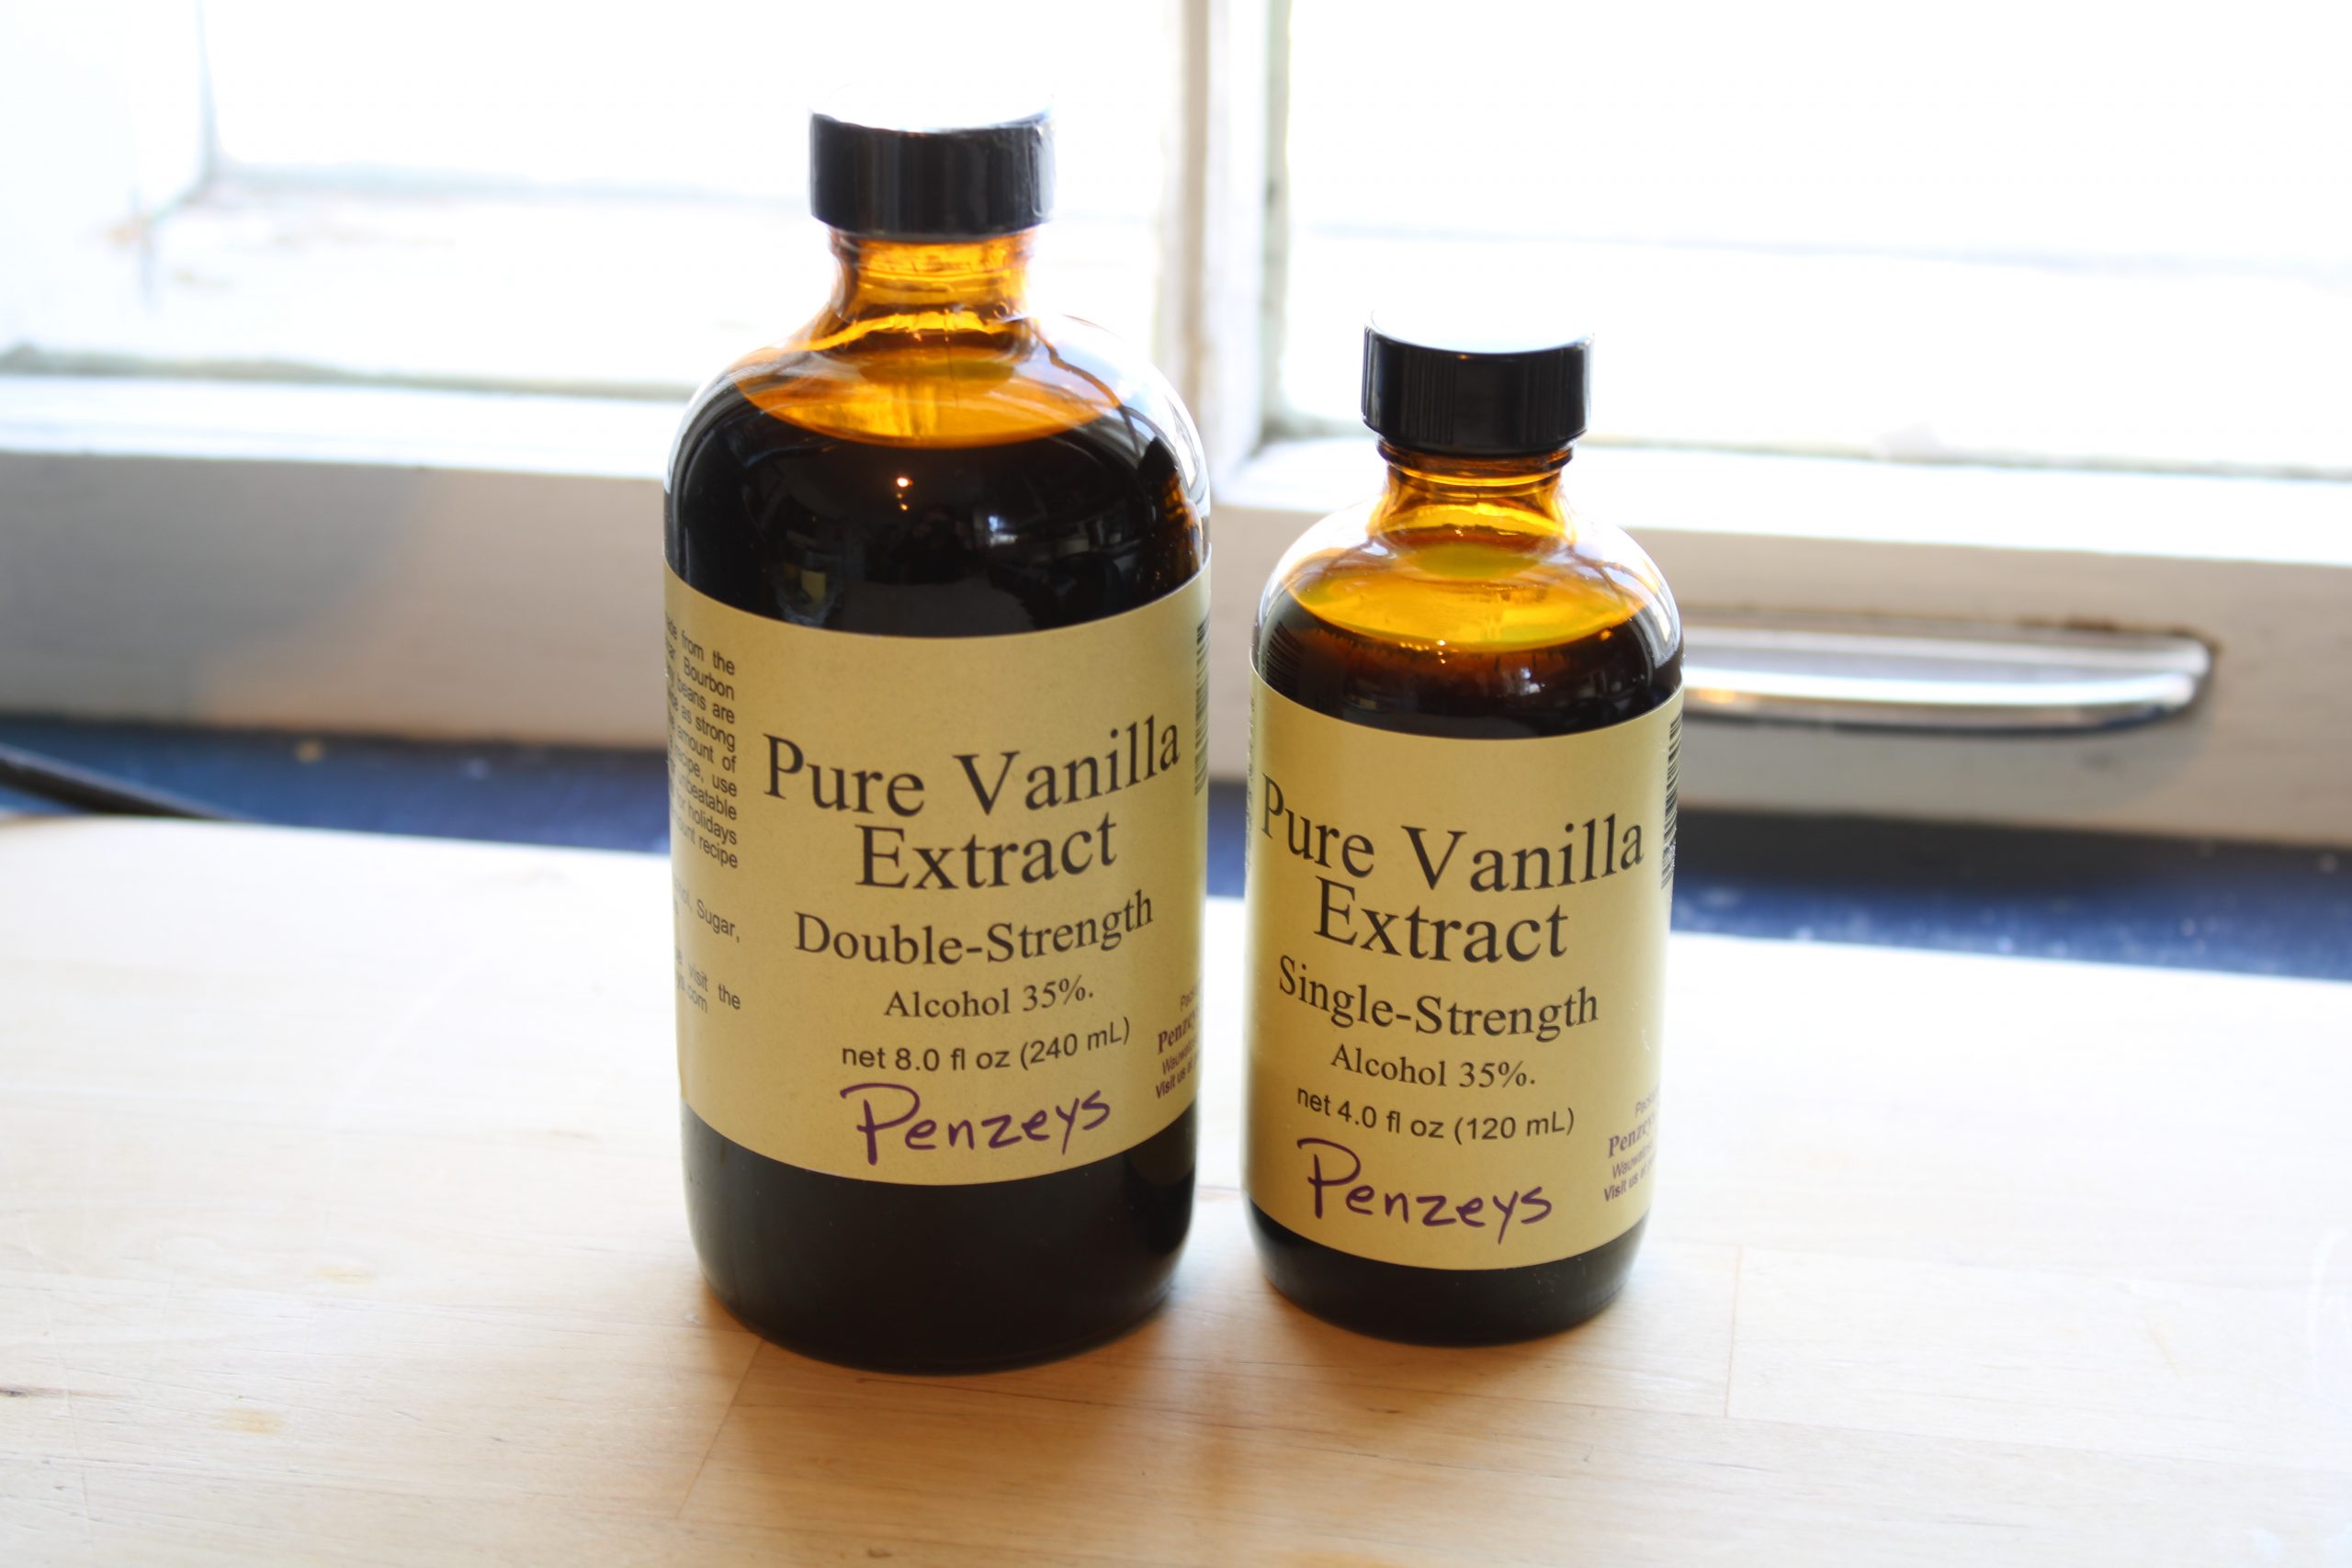 Penzeys pure vanilla extract double-strength or single-strength